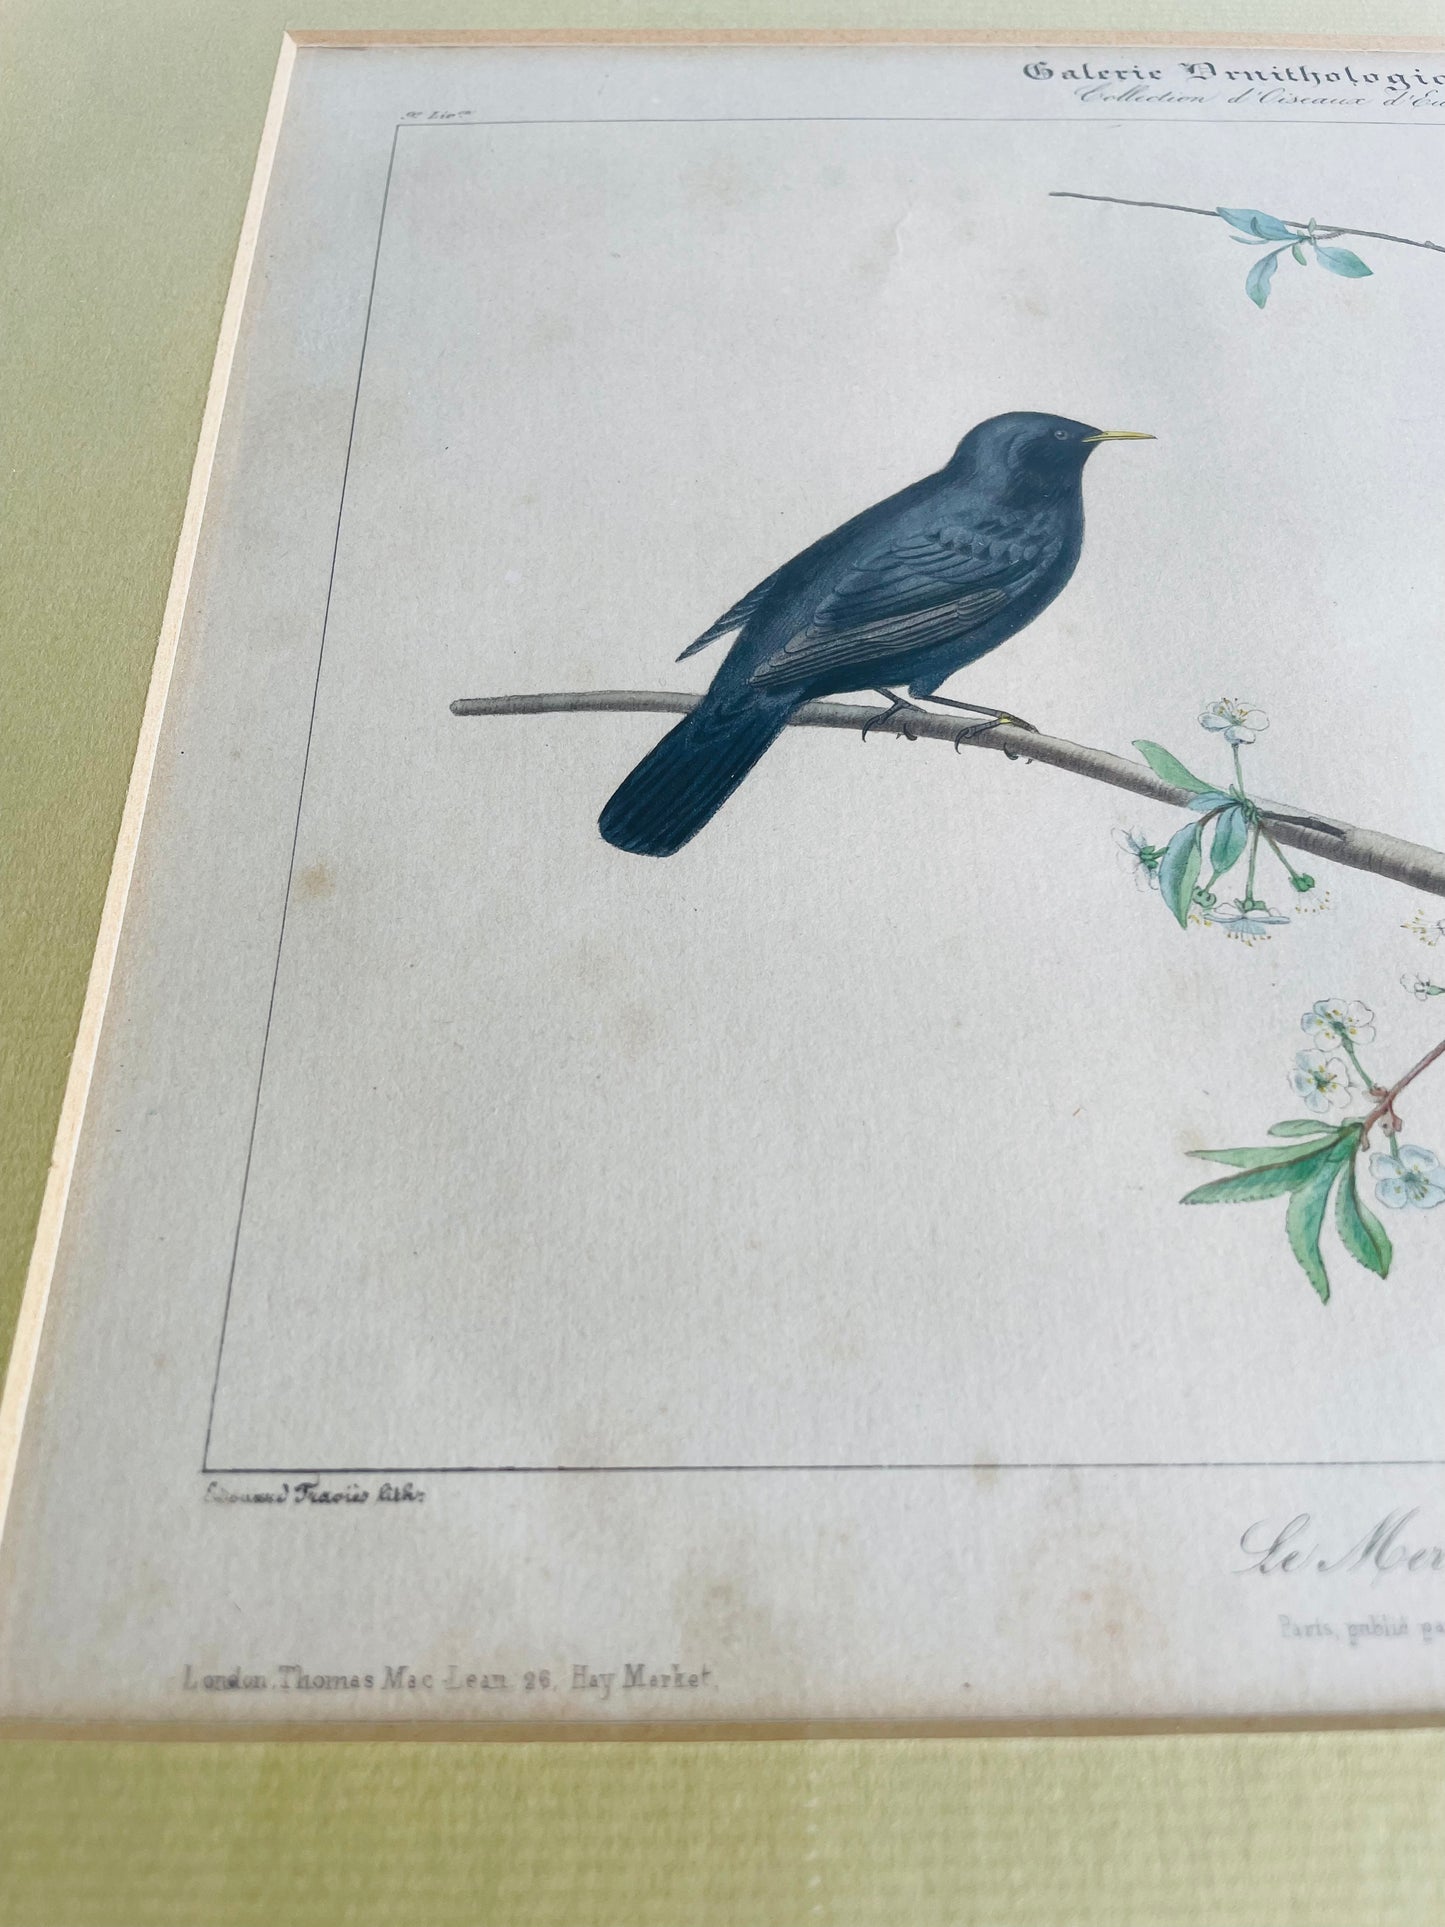 Edouard Travies Galerie Ornithologique Collection of European Birds Framed Lithograph Print - The Common Blackbird & The Cuckoo